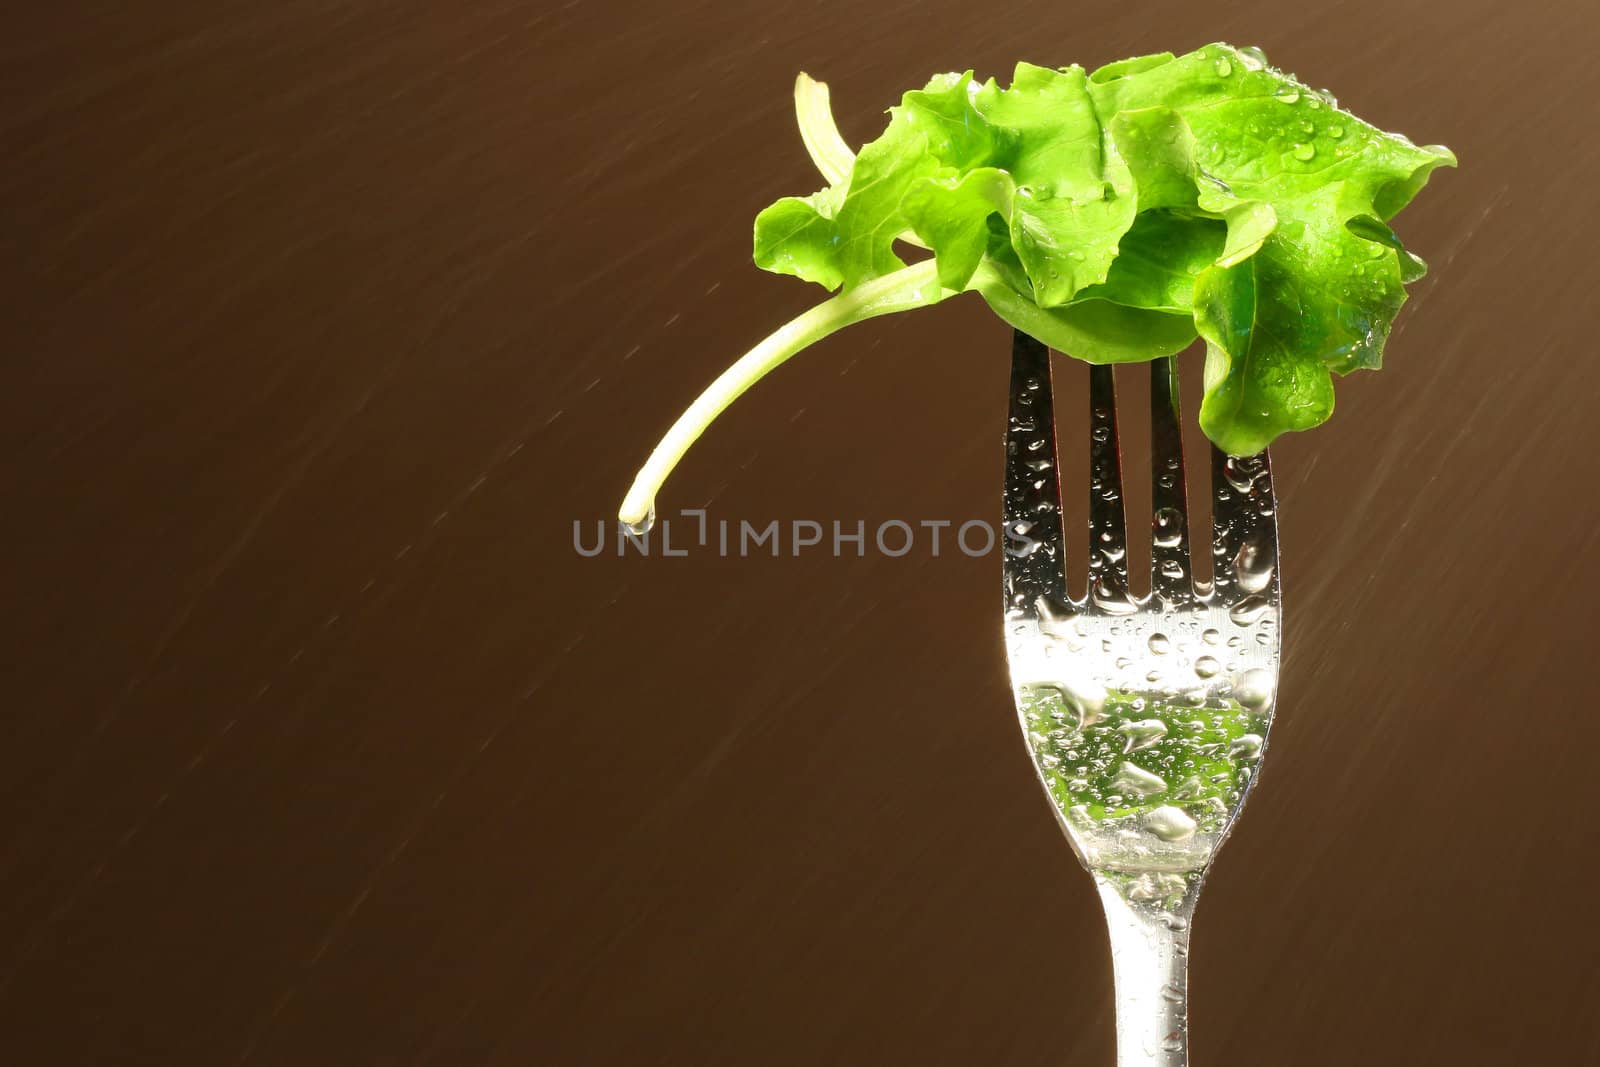 Leaf of lettuce on a fork by Sandralise